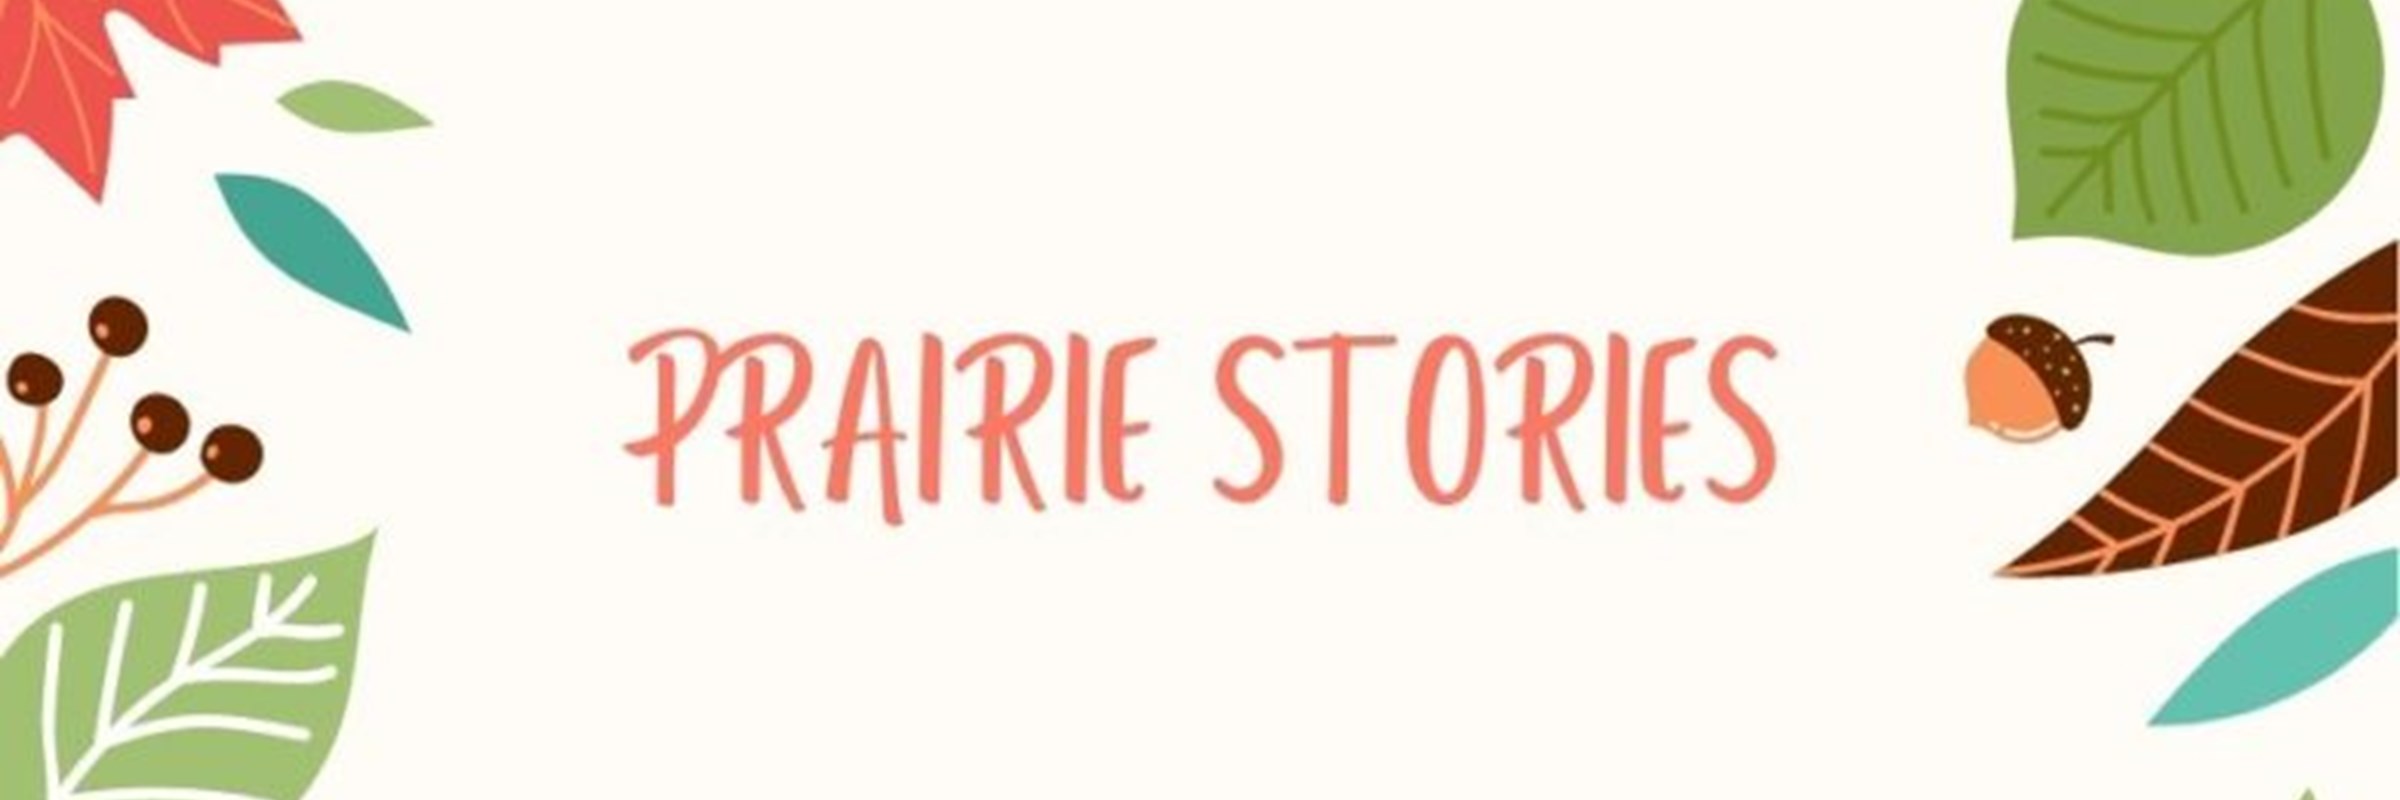 Prairie Stories at Museum of Grand Prairie